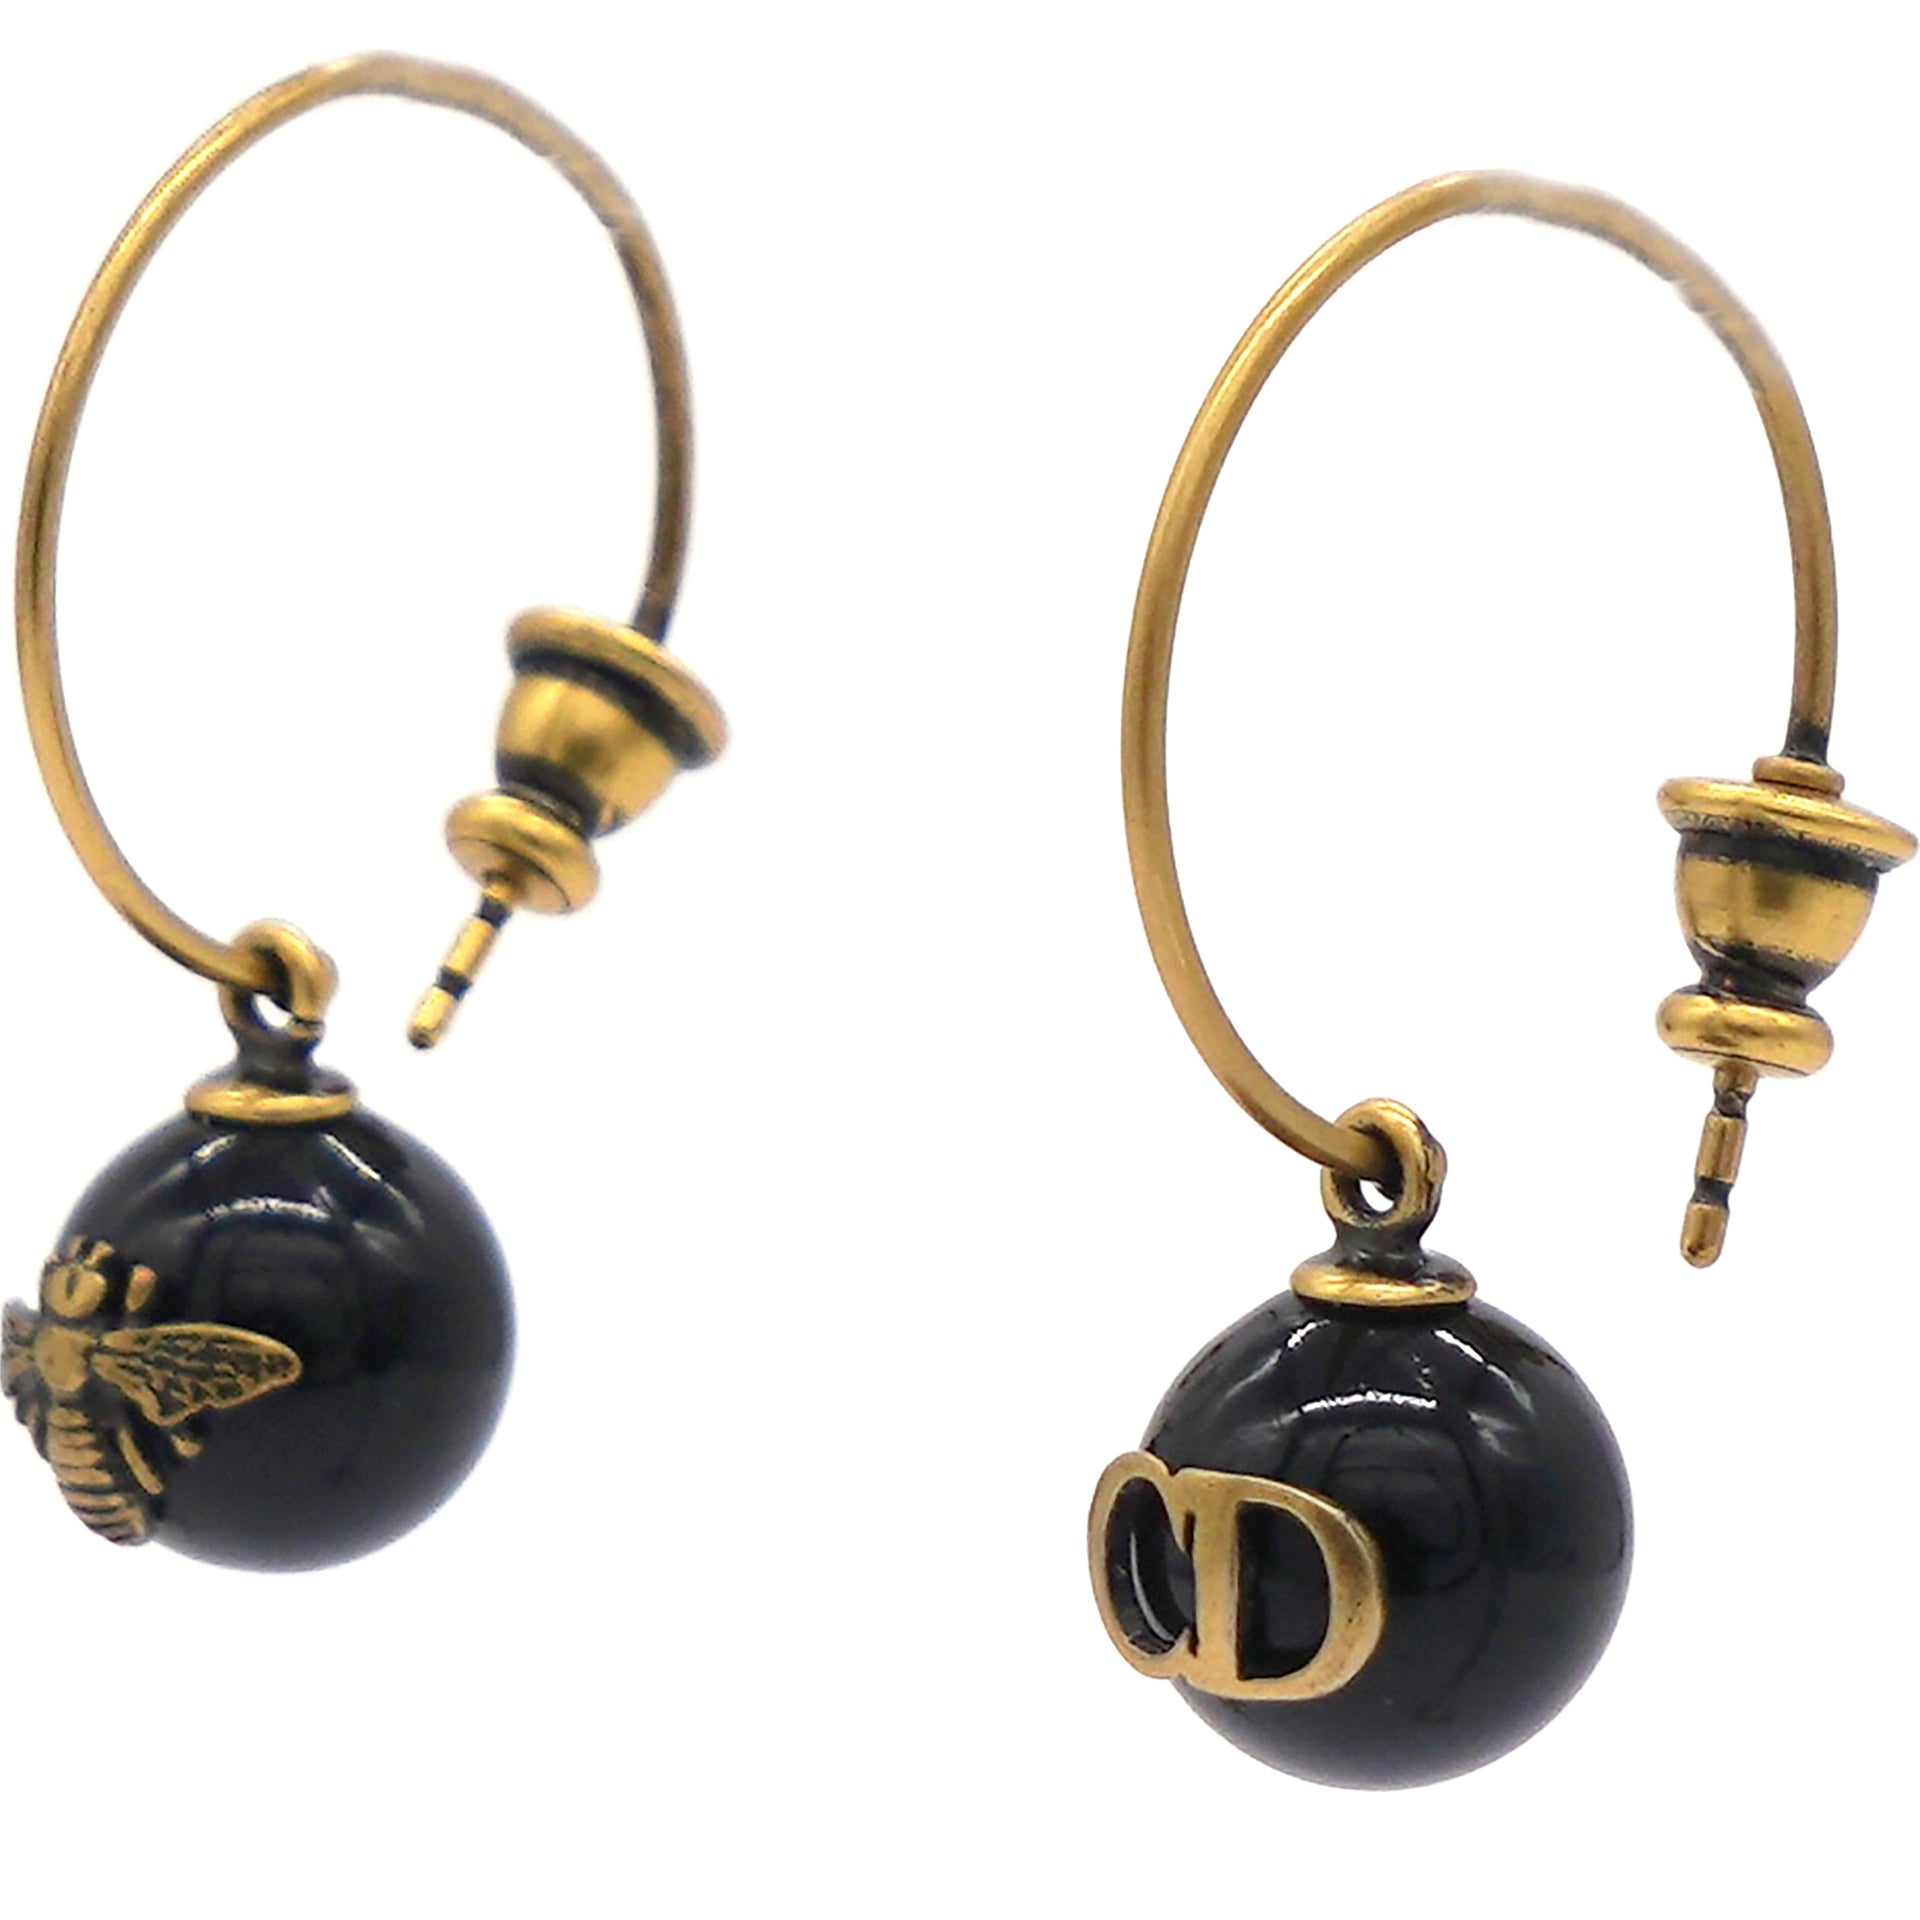 Gold Resin Black Open Hoop Earrings